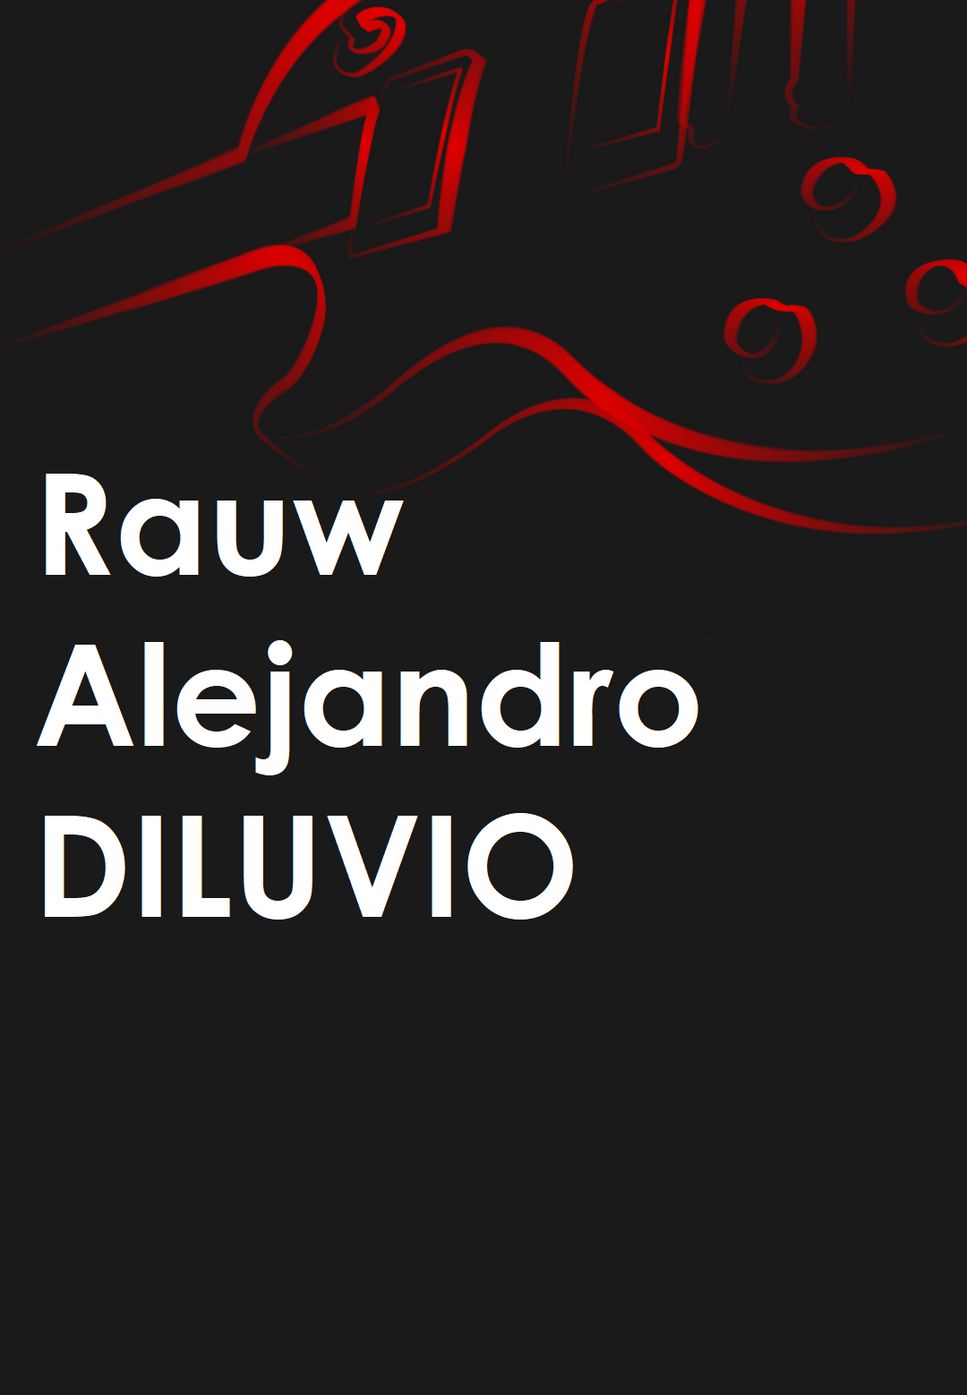 Rauw Alejandro - DILUVIO by Mario Serrato